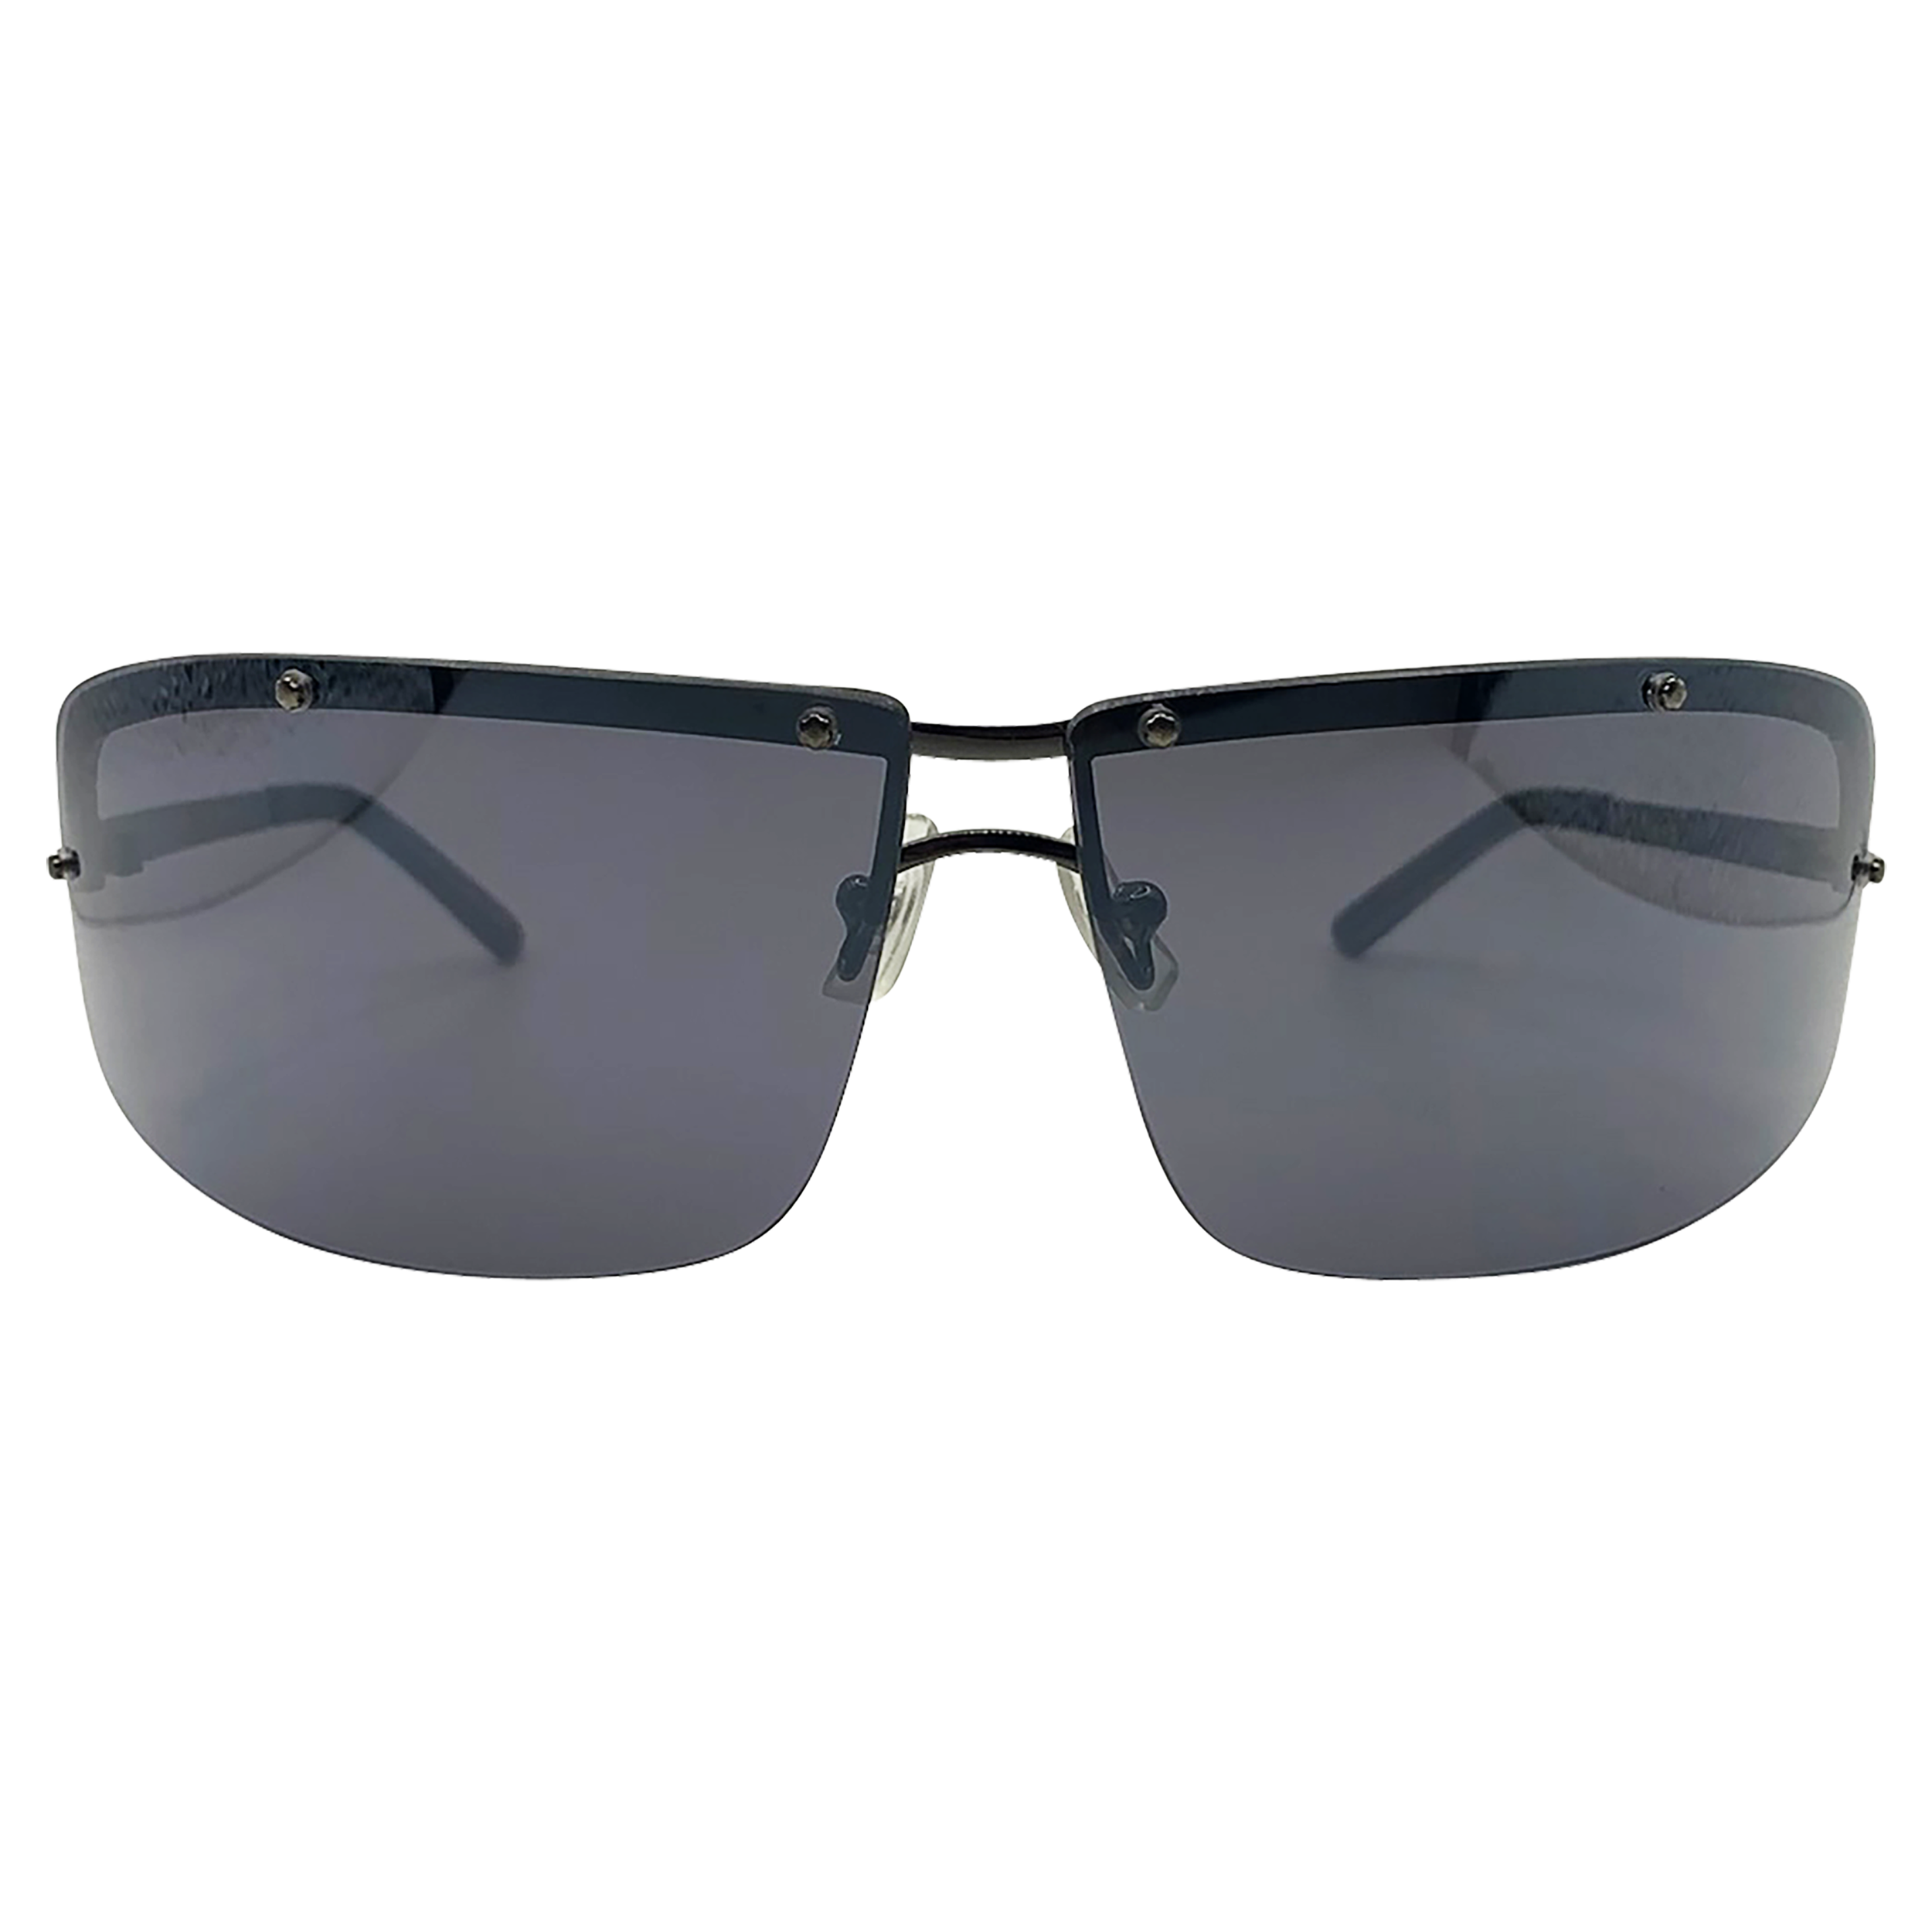 PRESSED Rimless Shield Sunglasses